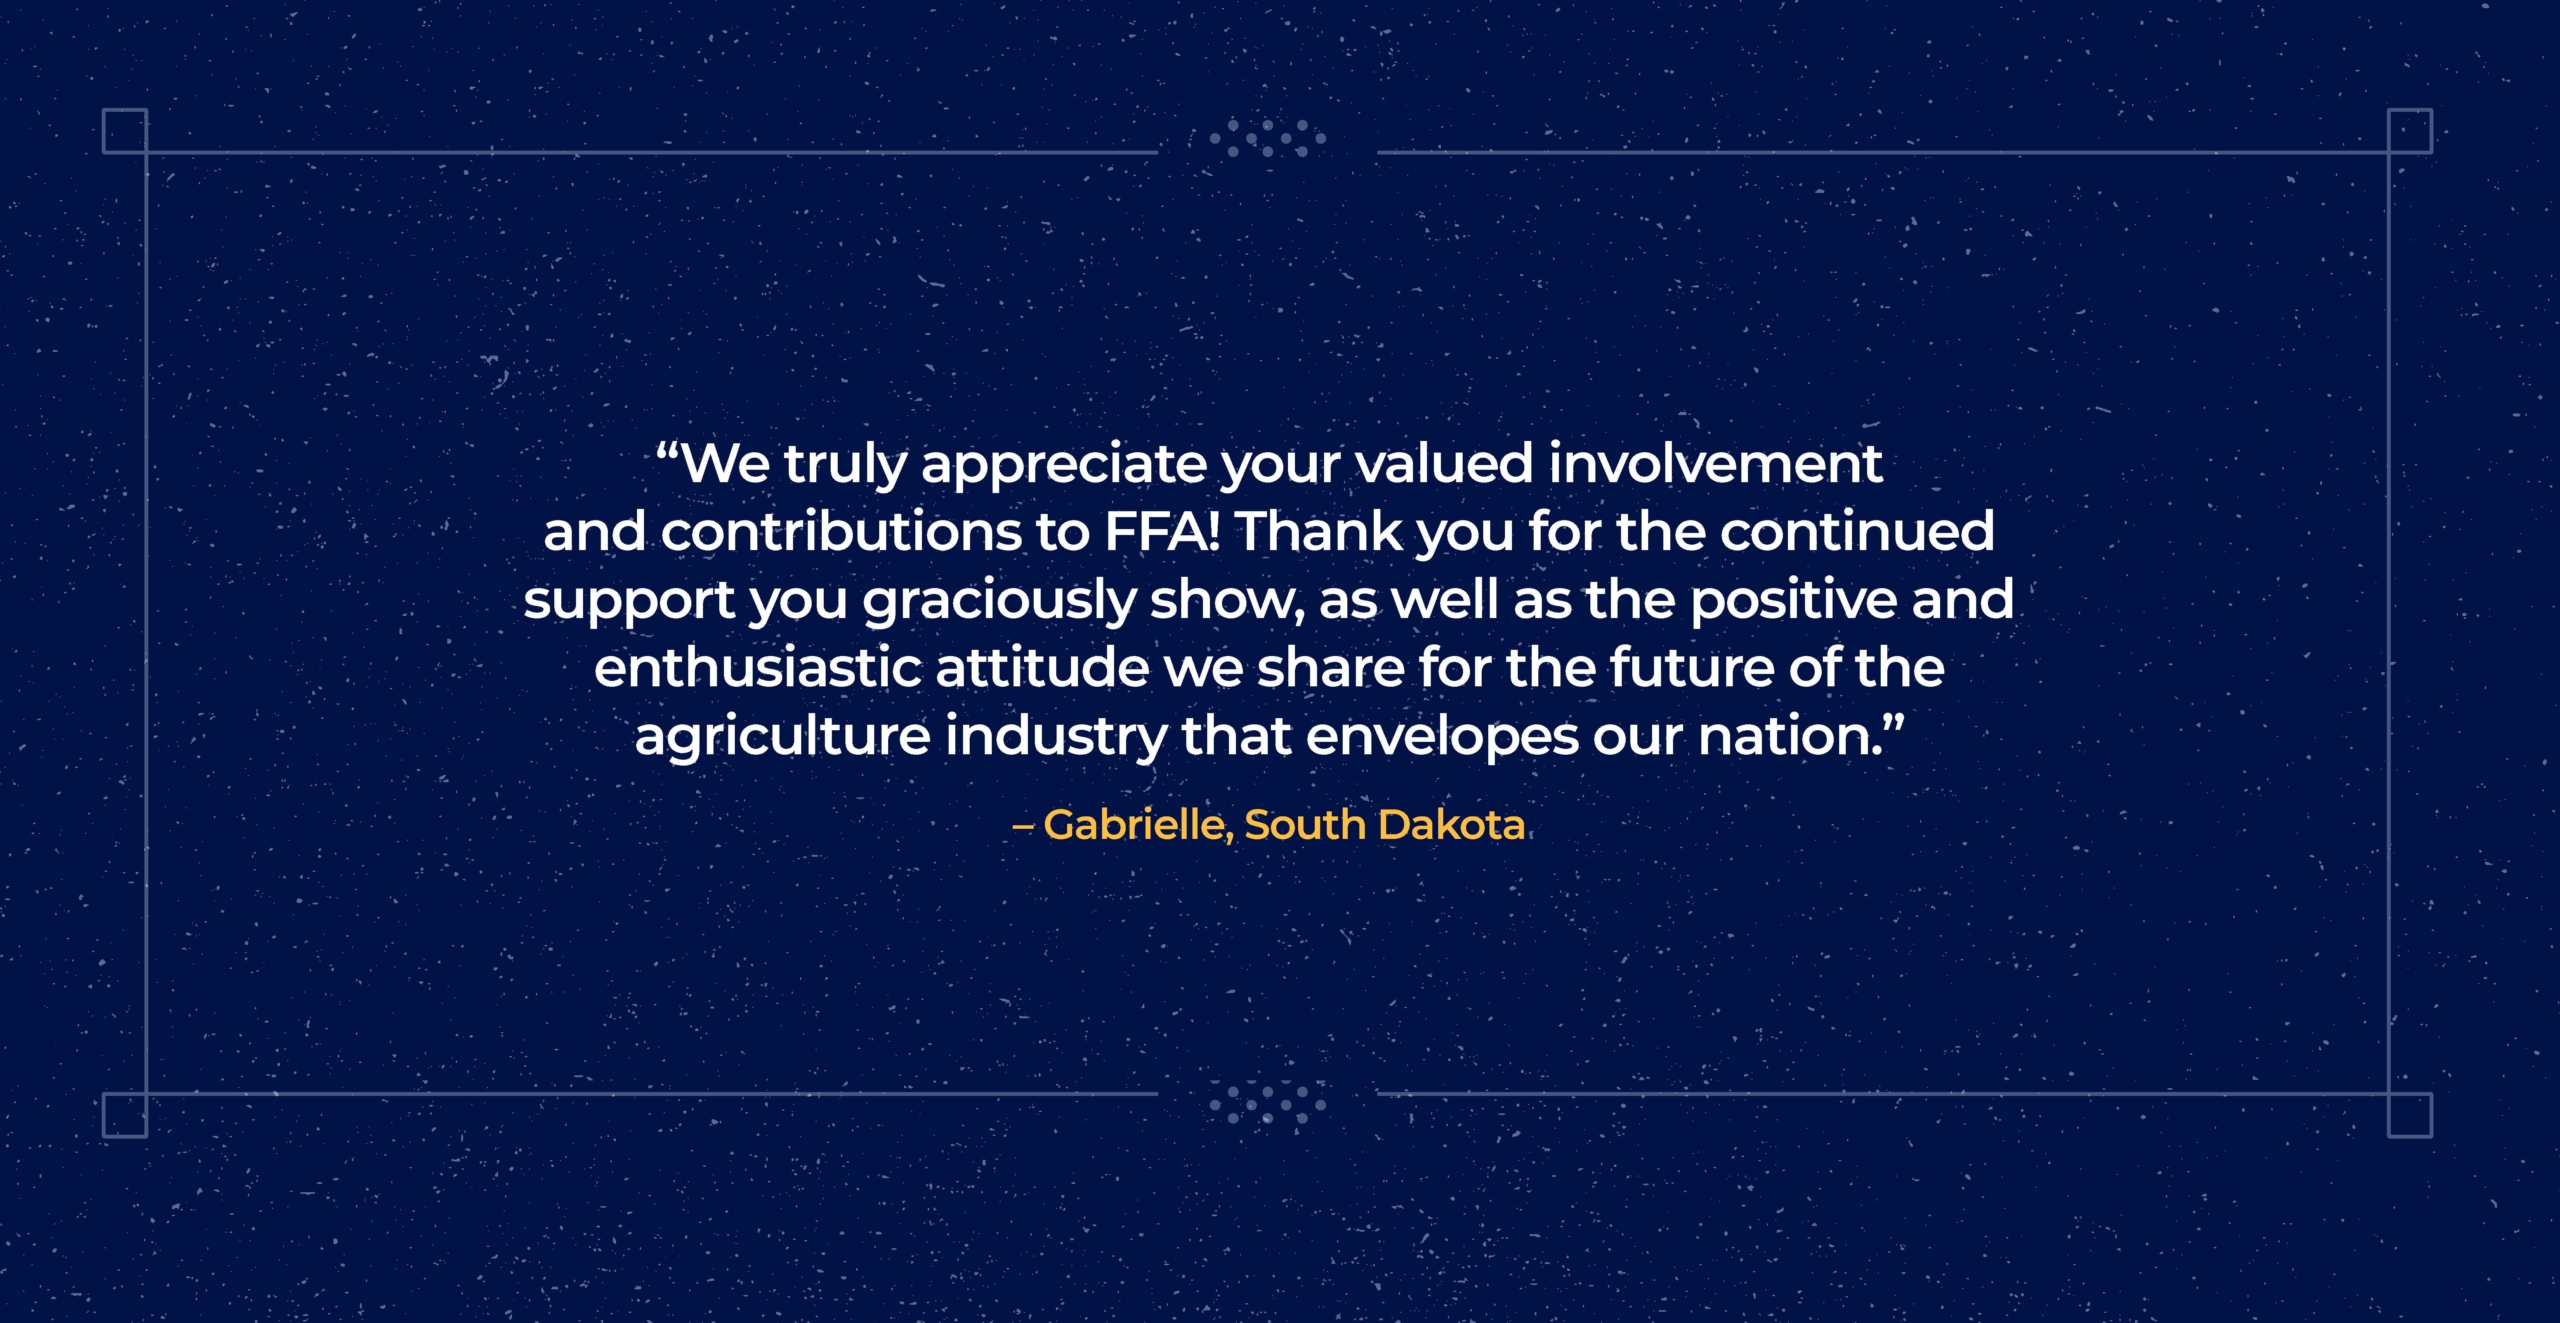 Gabriel's Quote - South Dakota